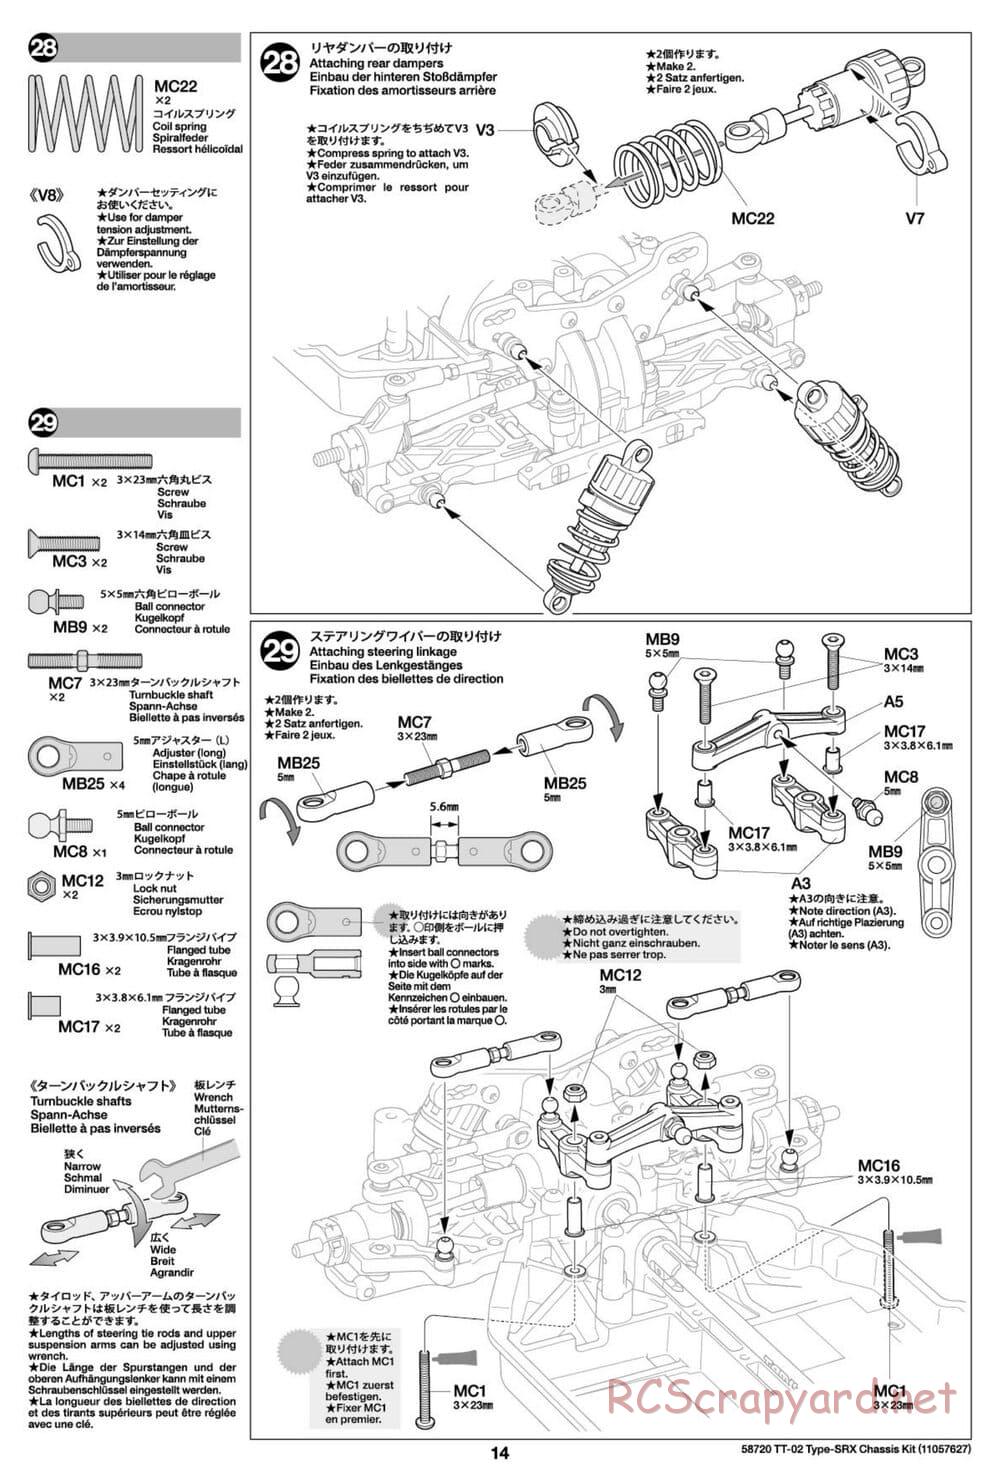 Tamiya - TT-02 Type-SRX Chassis - Manual - Page 14